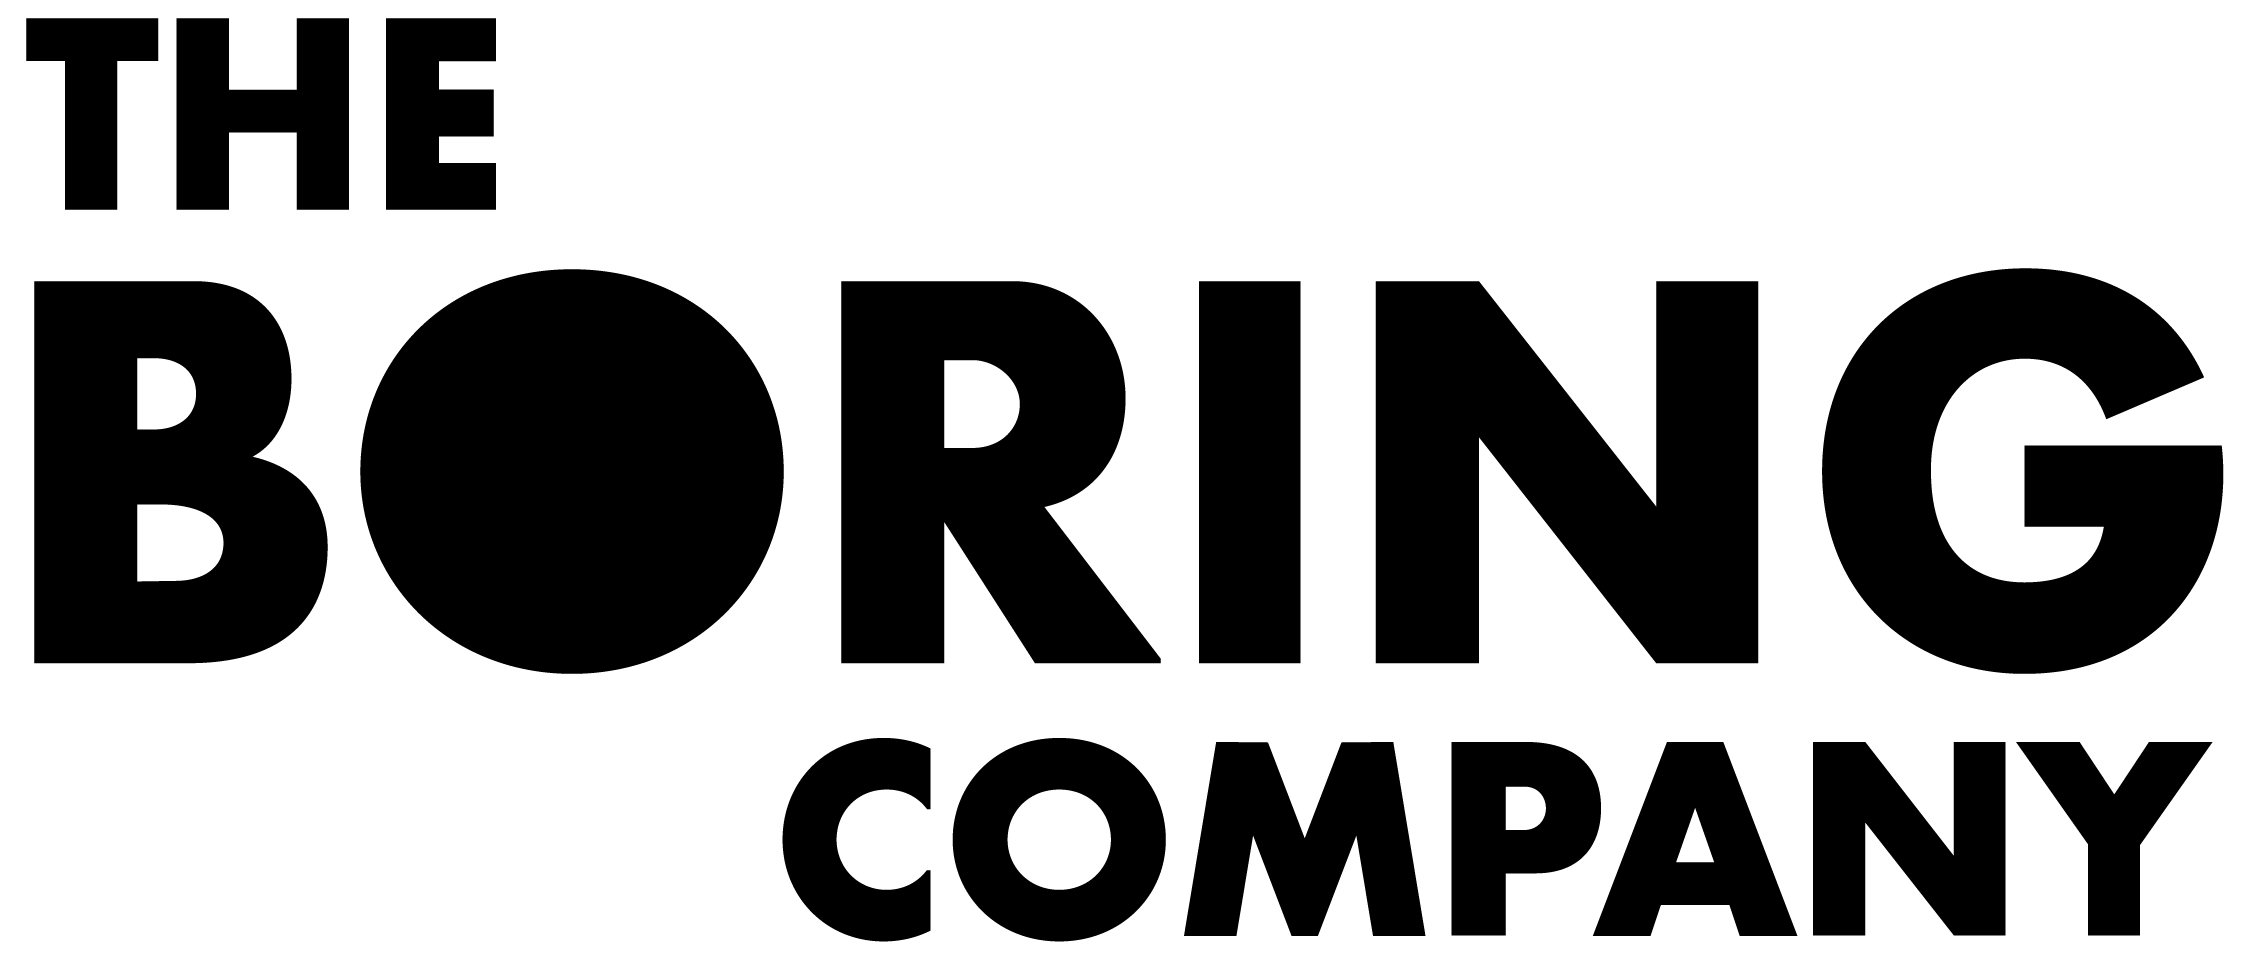 The Boring Company logo colors